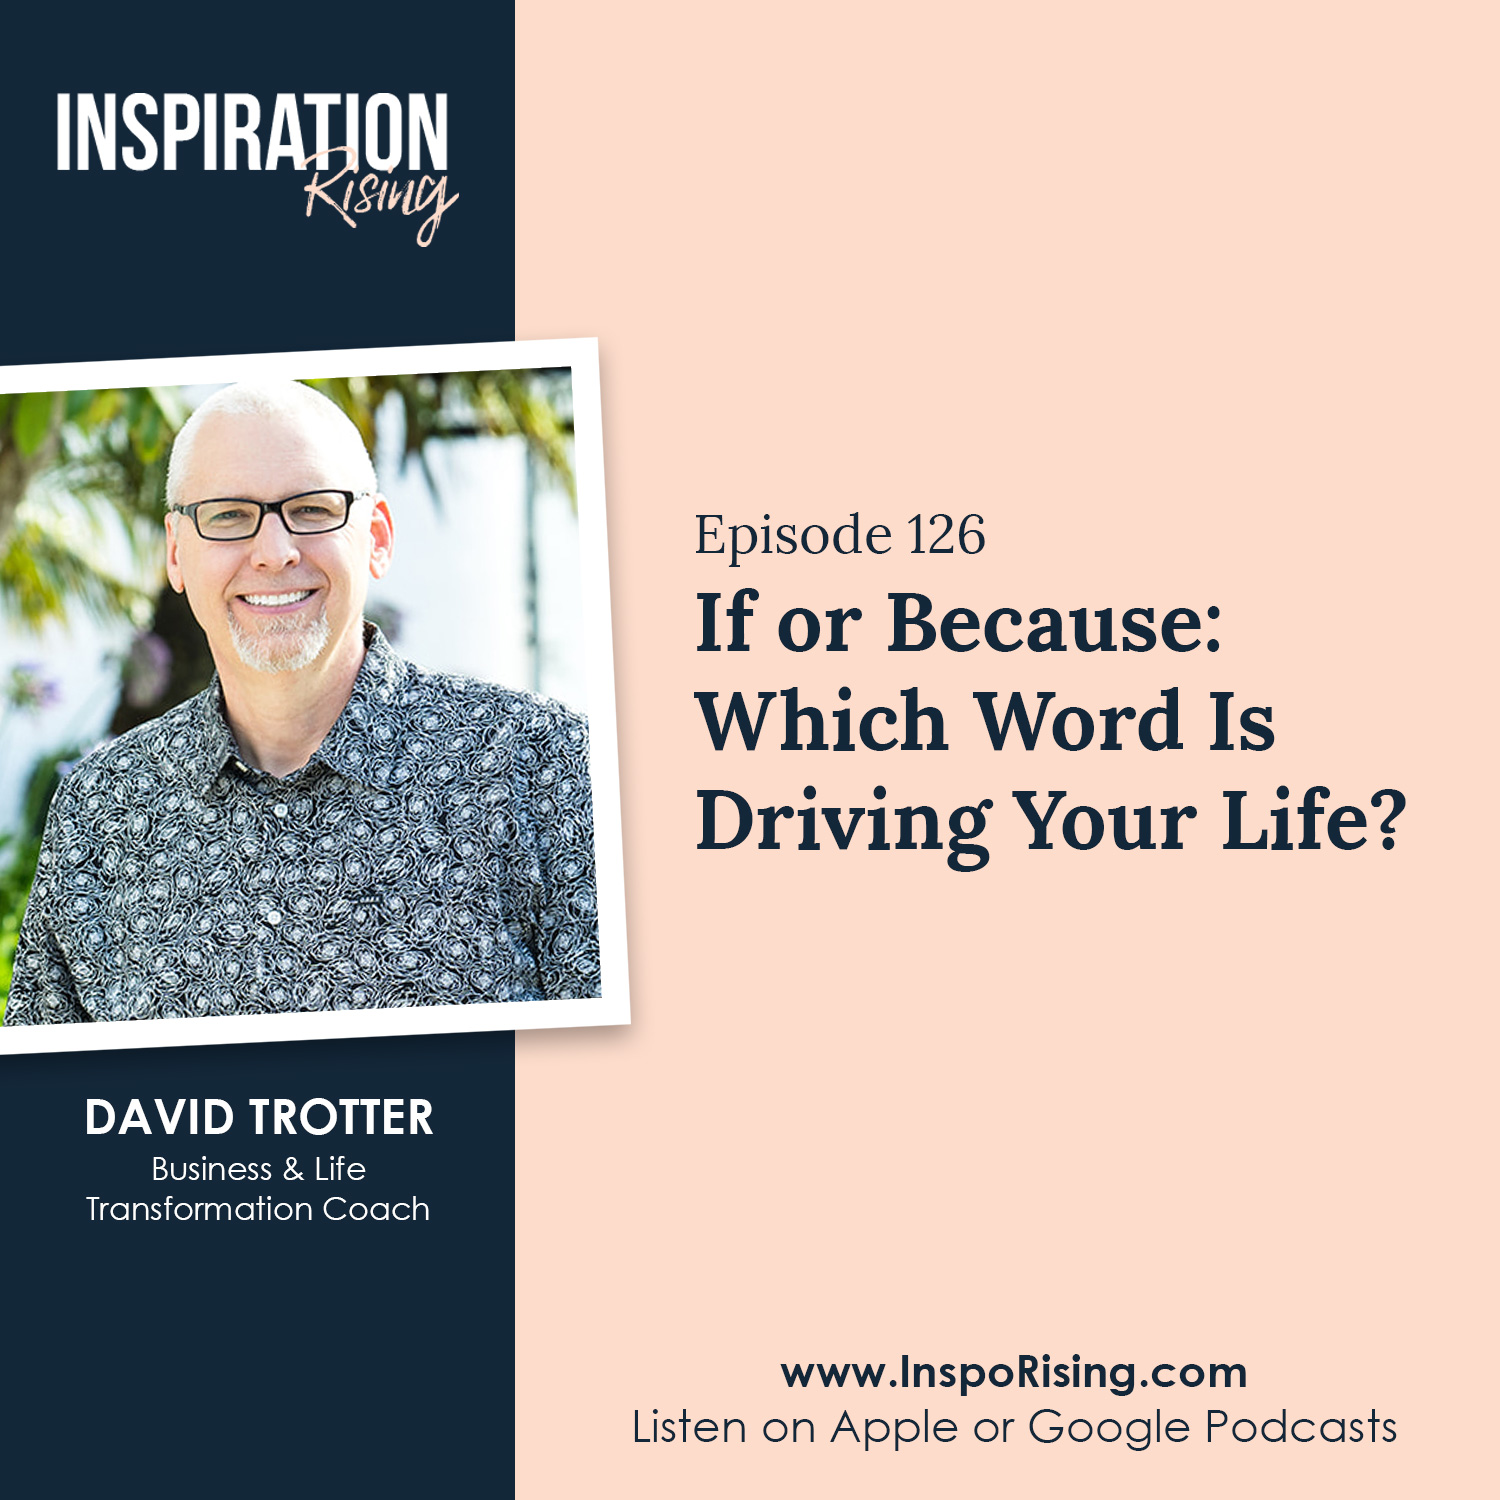 David Trotter - Business Coach